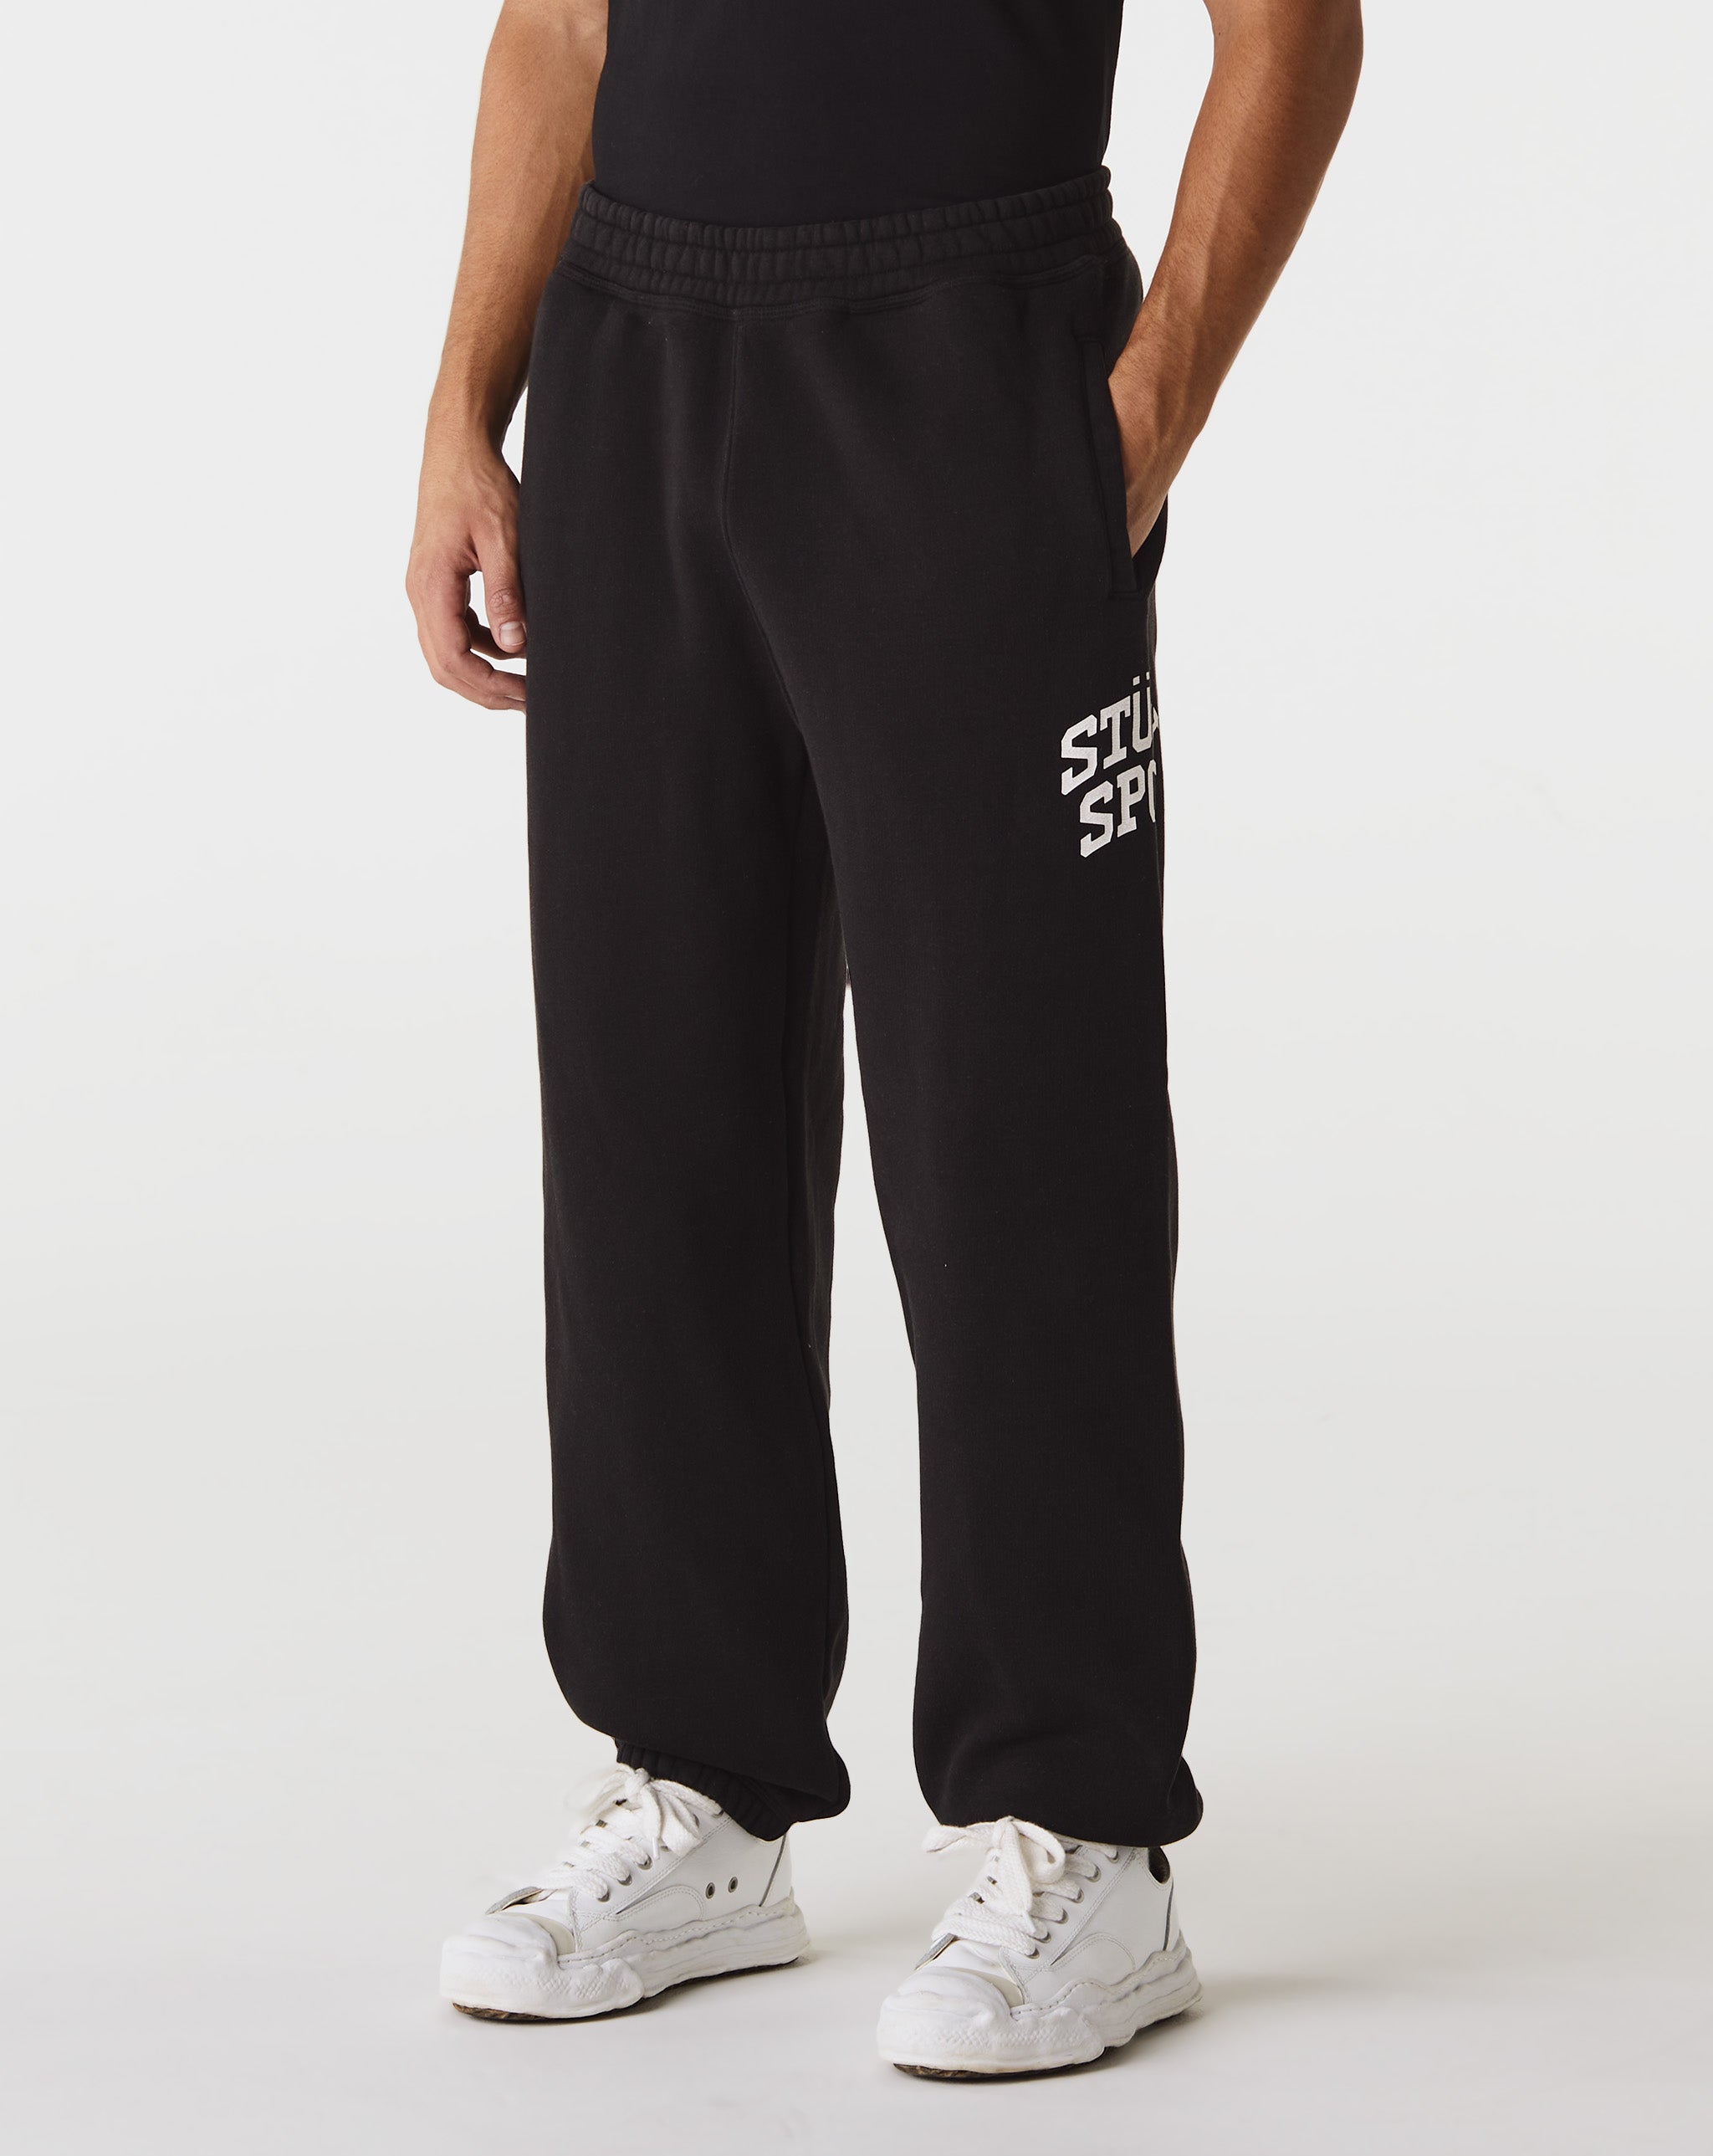 Stüssy Sport Crackle Fleece Pants  - Cheap Urlfreeze Jordan outlet